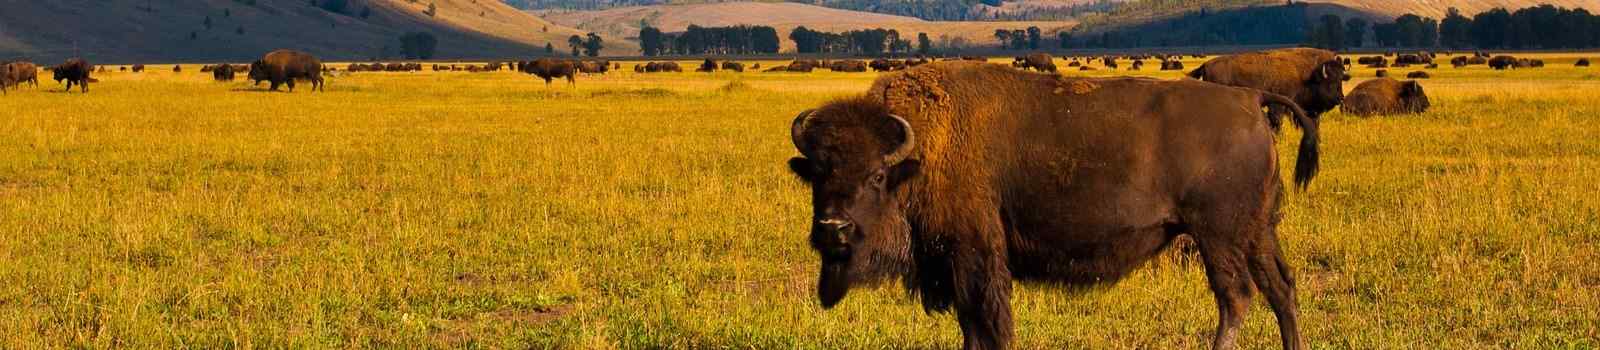 AMERIKAS-NATIONALPARKS -Yellowstone National Park Bison Paradis 125195225